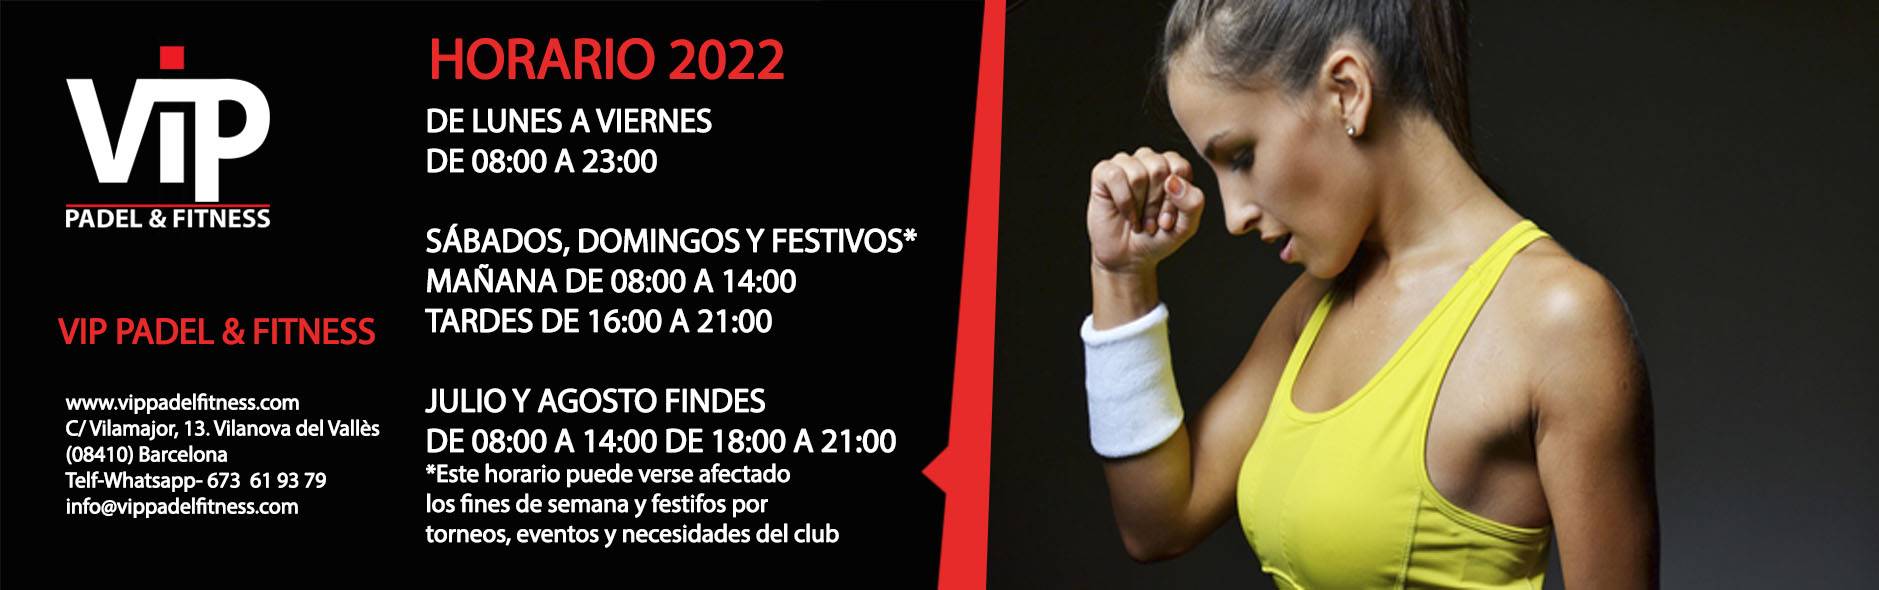 banner web horarios club 2022.jpg